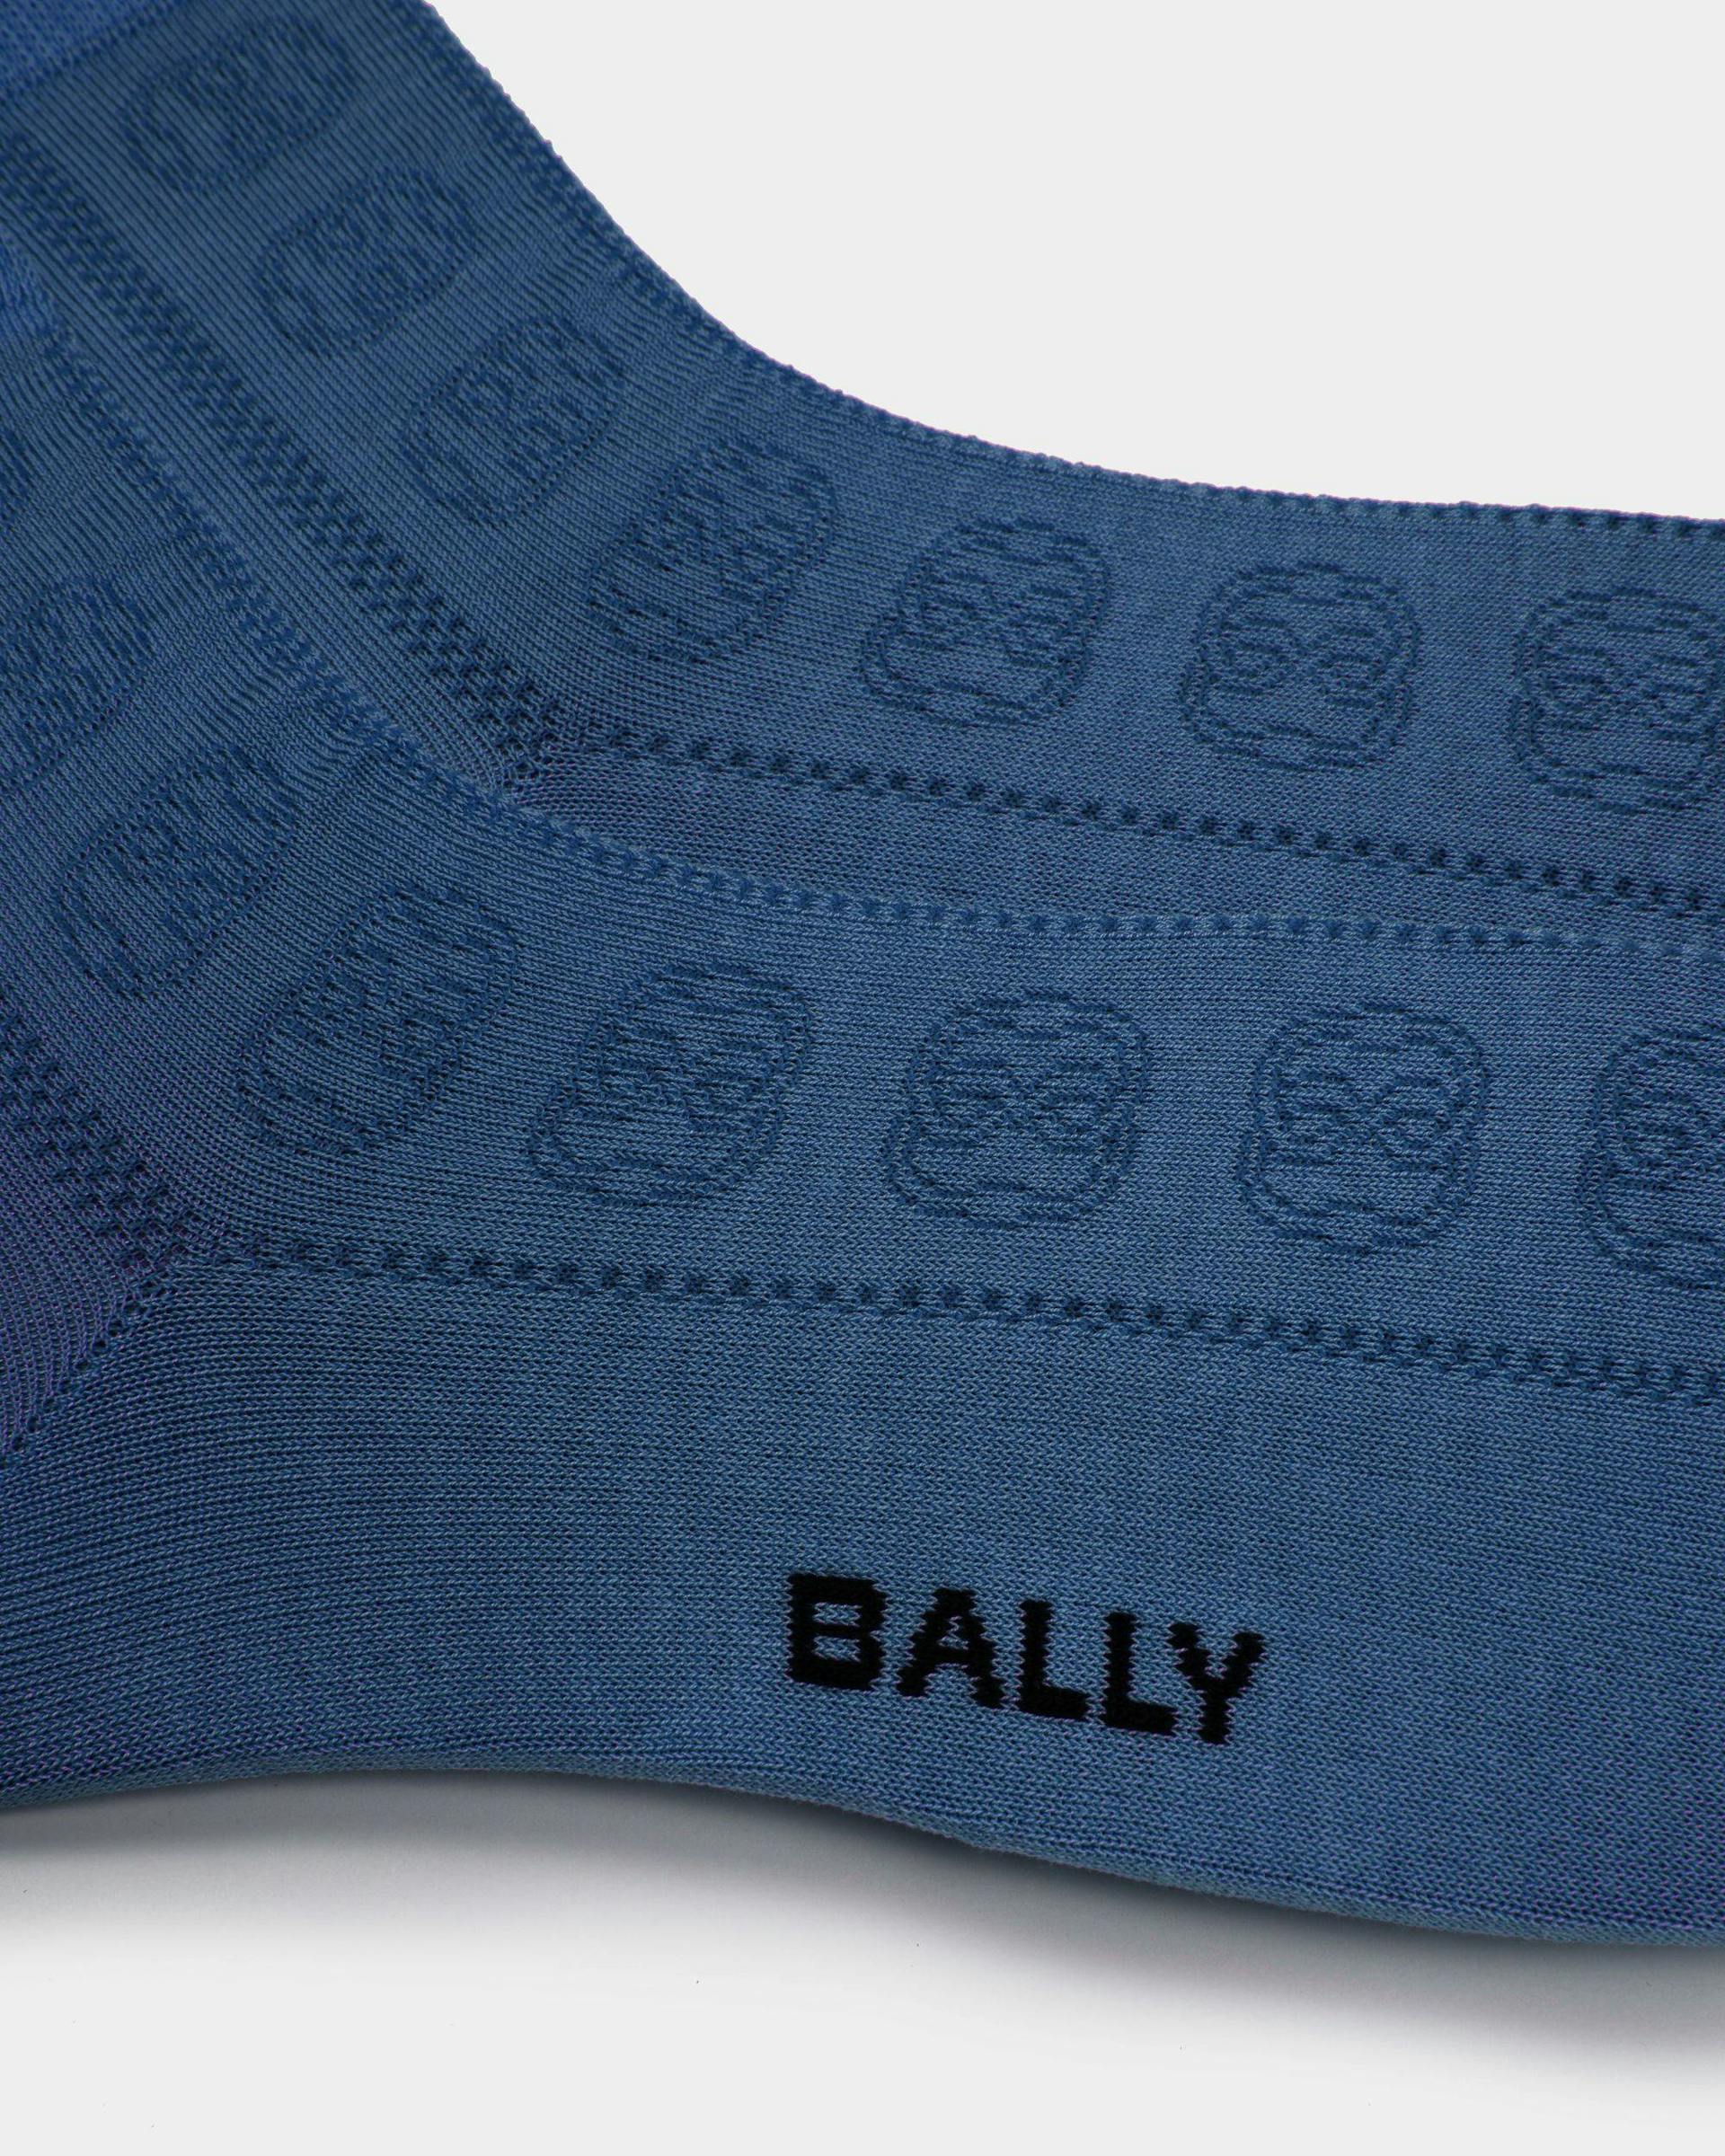 Women's Socks in Blue Cotton | Bally | Still Life Detail